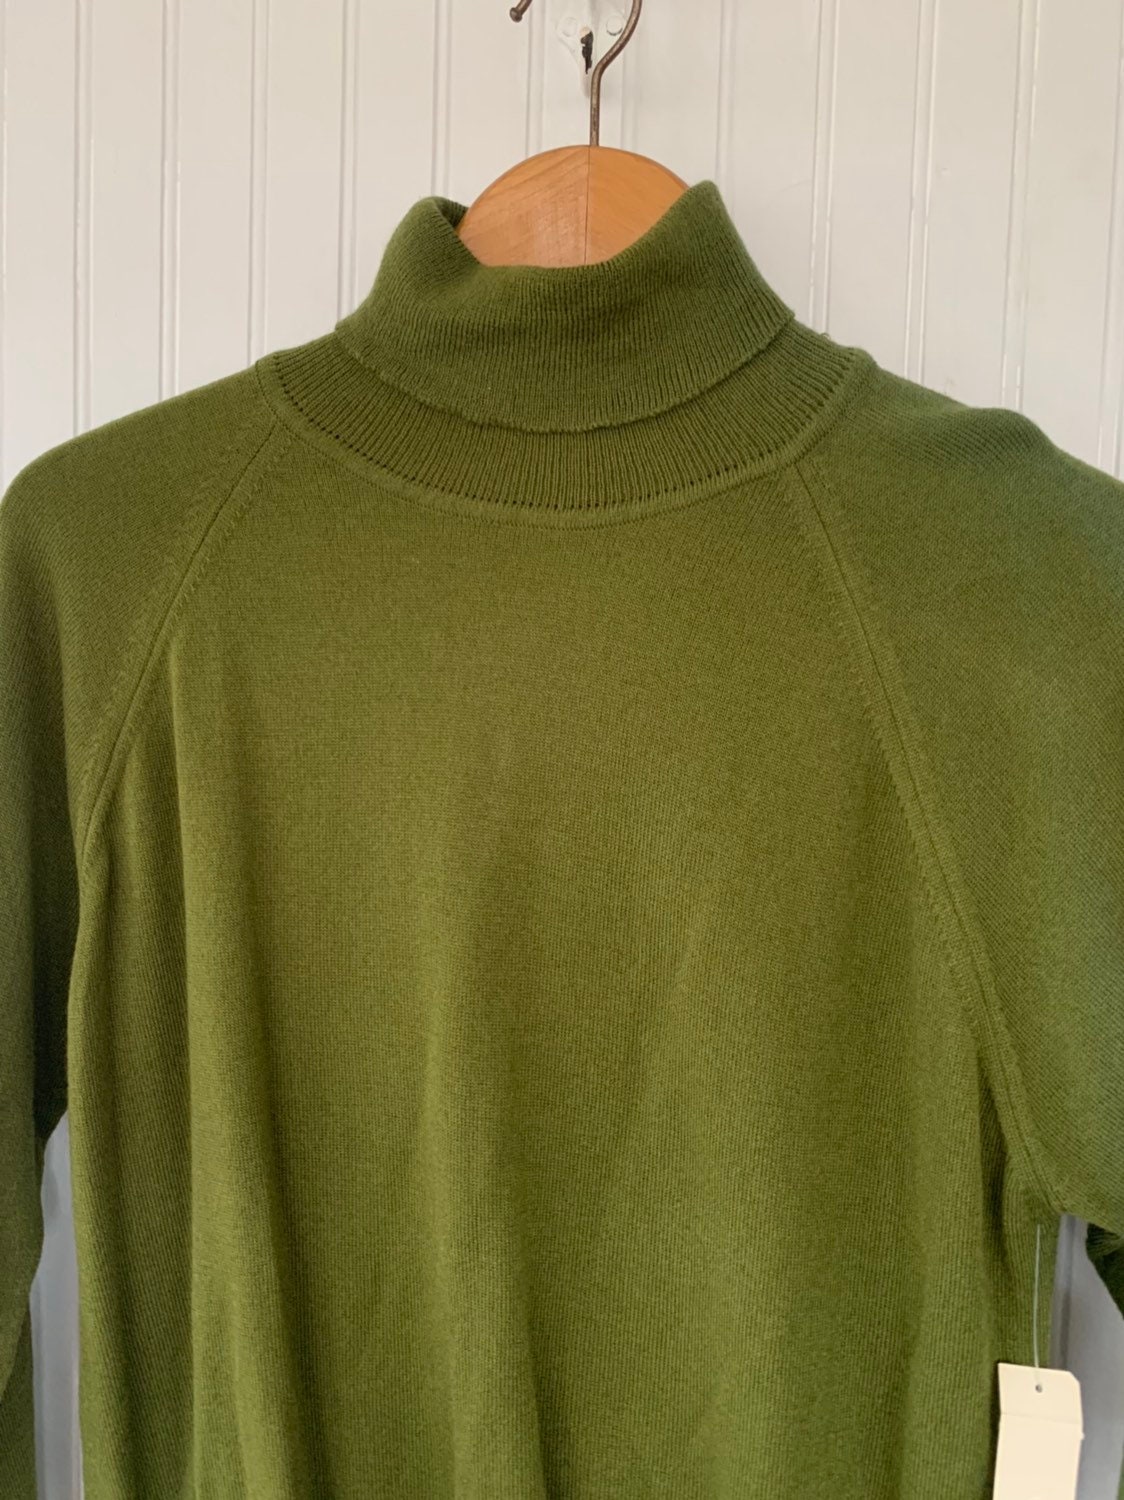 NWT Vintage 80s Large Olive Green Turtleneck Pullover Knit Sweater ...